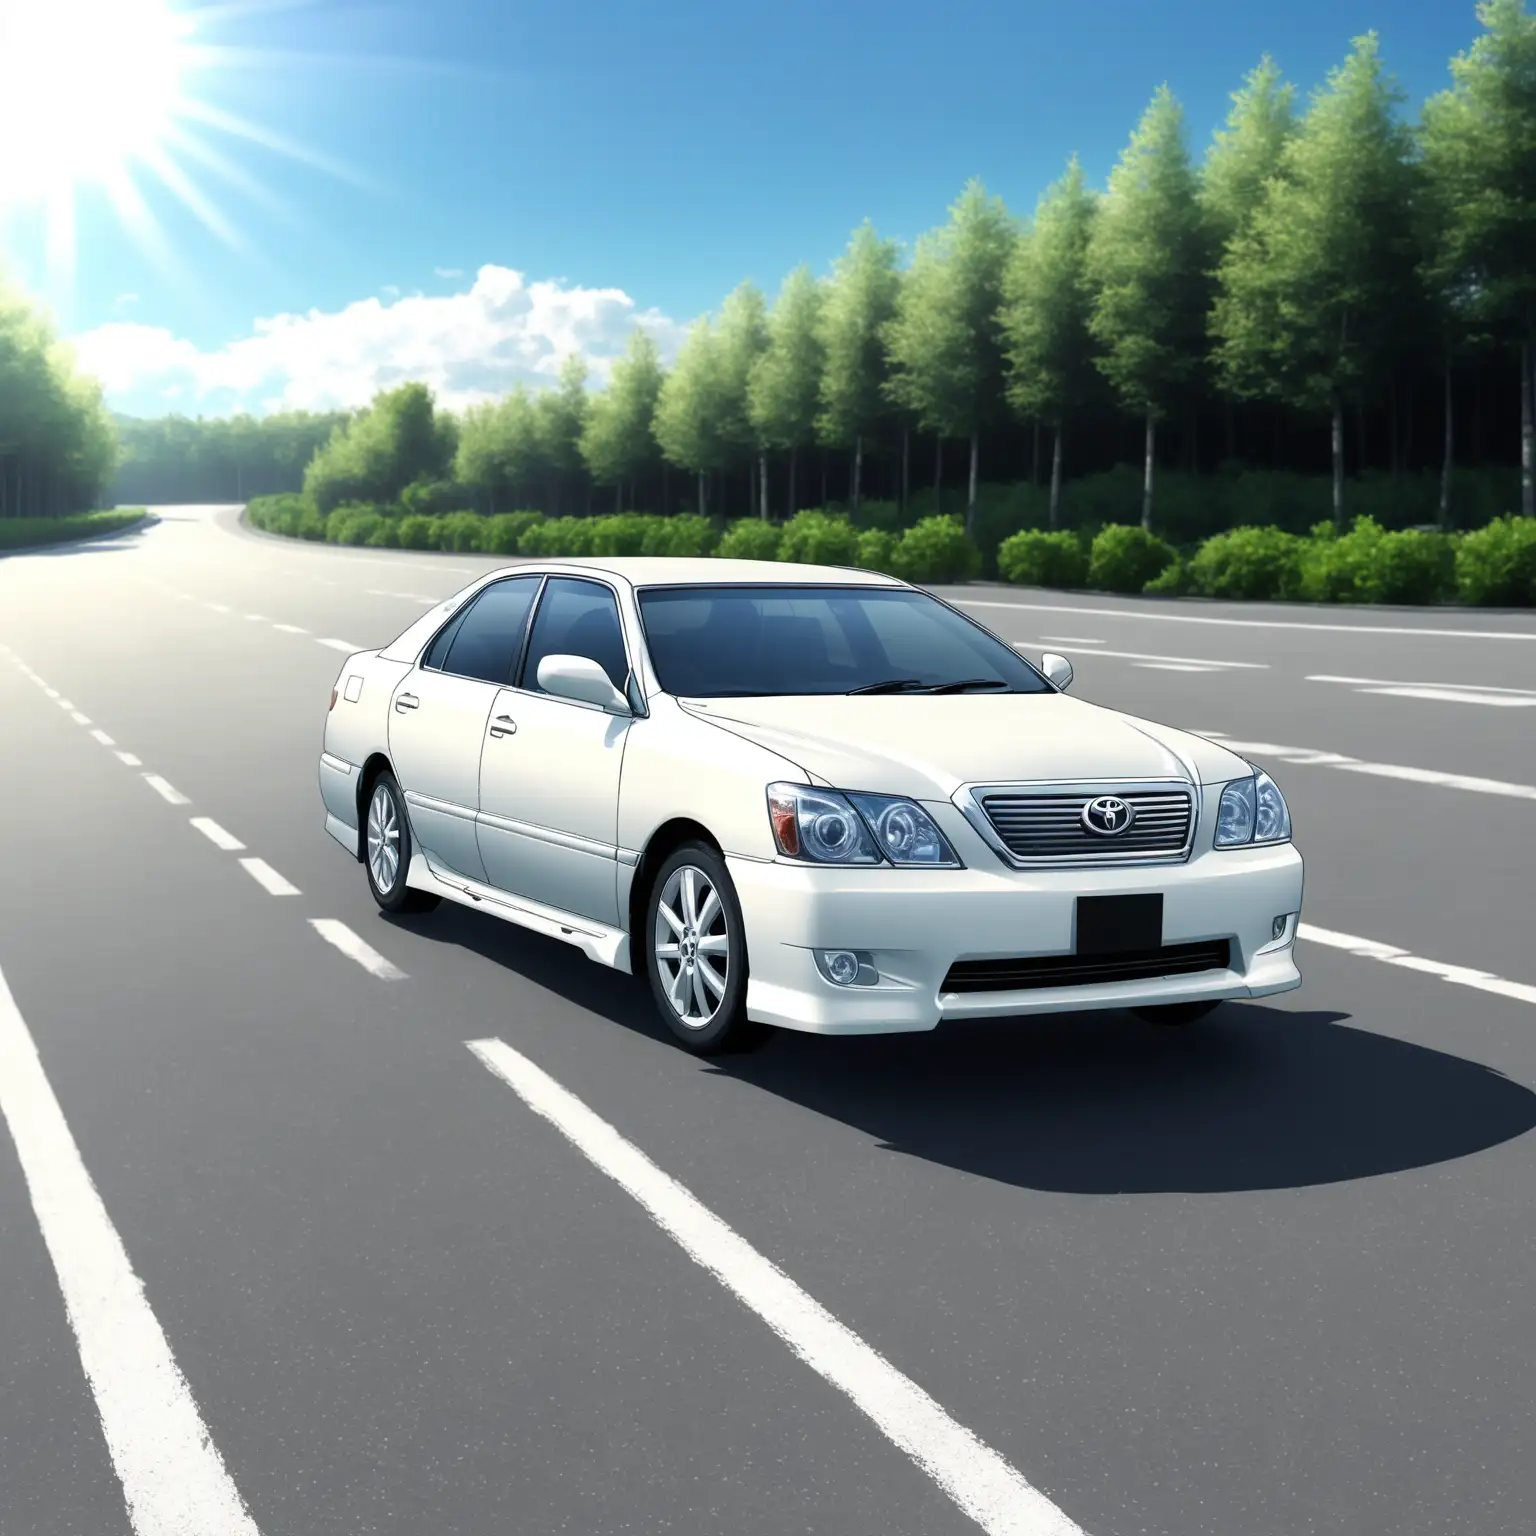 White-Toyota-Aristo-Car-on-Grey-Asphalt-Road-Under-Sunlight